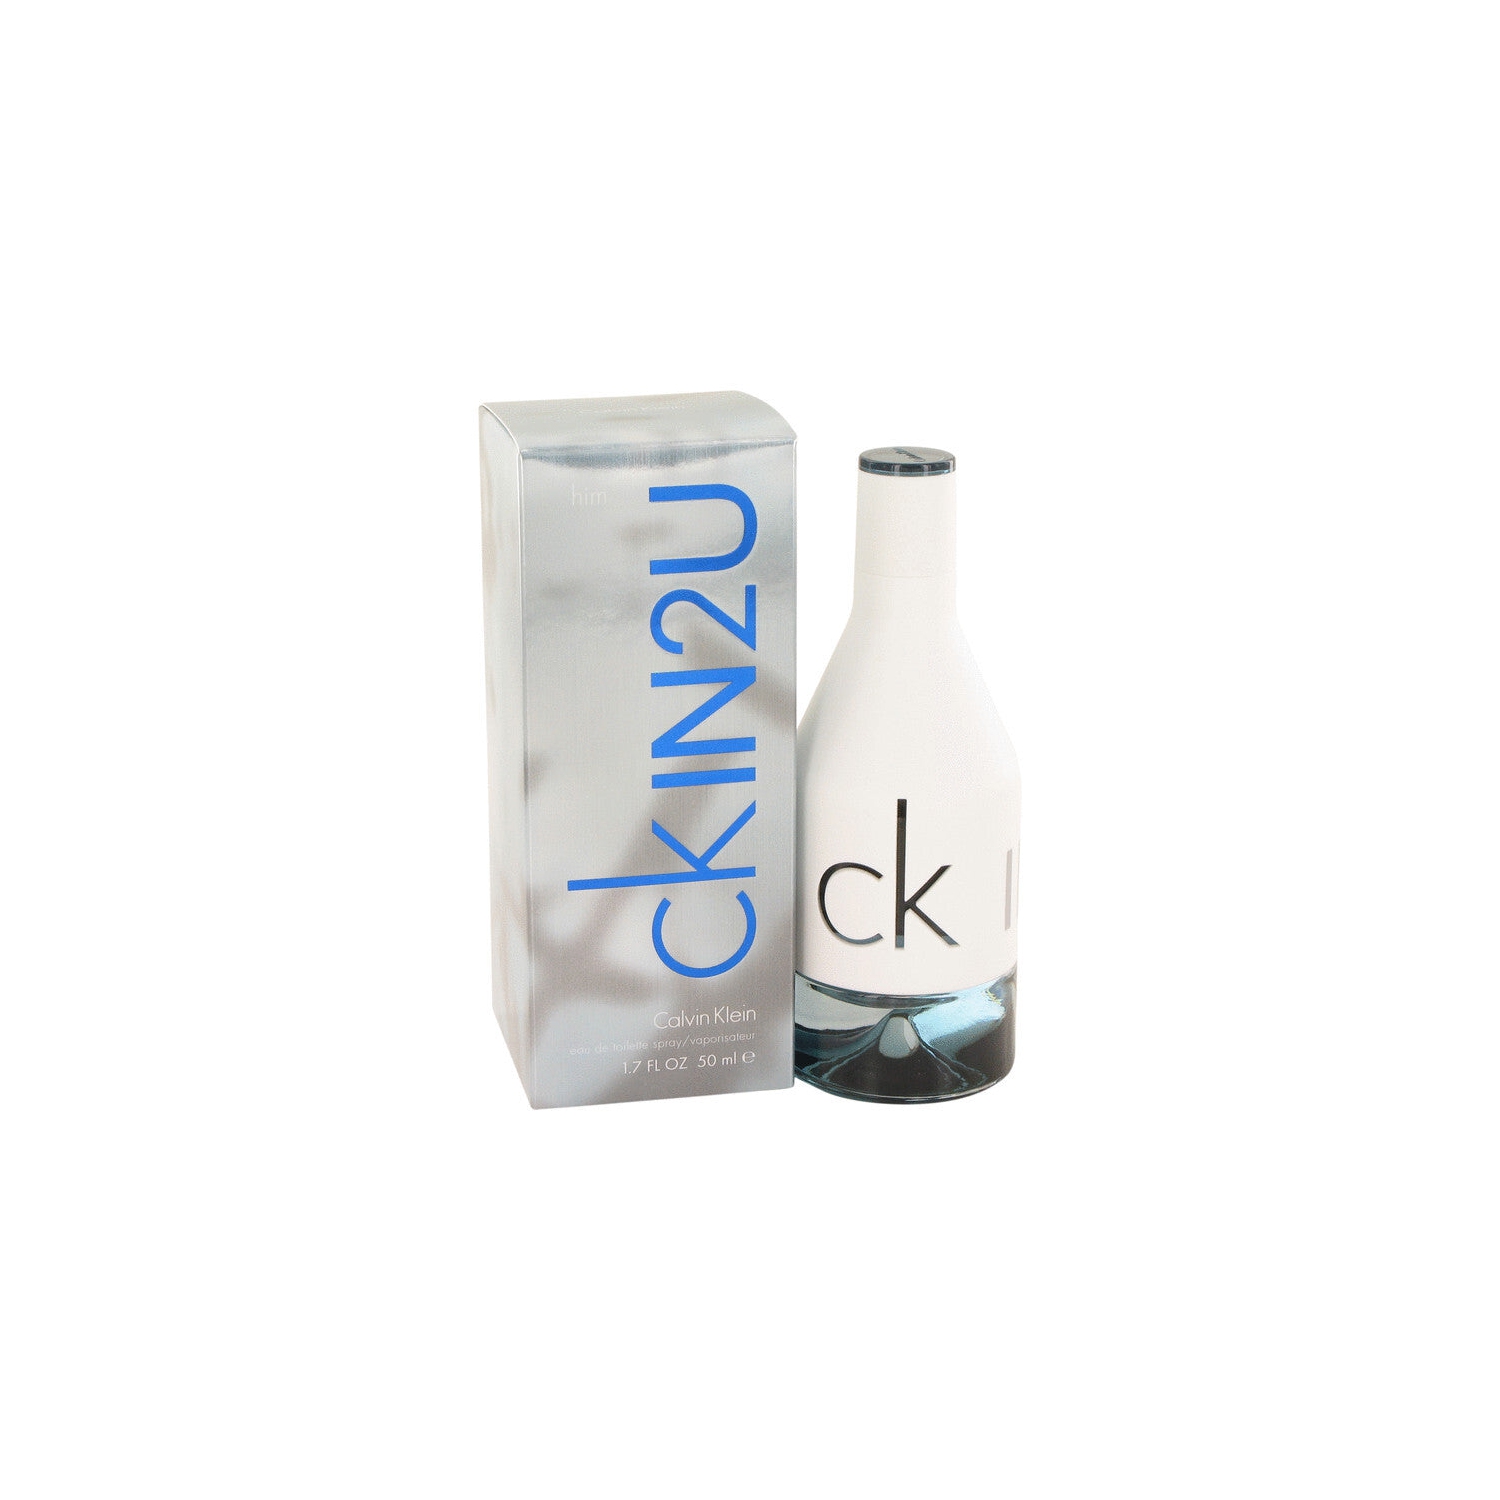 CK In 2U by Calvin Klein Eau De Toilette Spray (Men) 1.7 oz